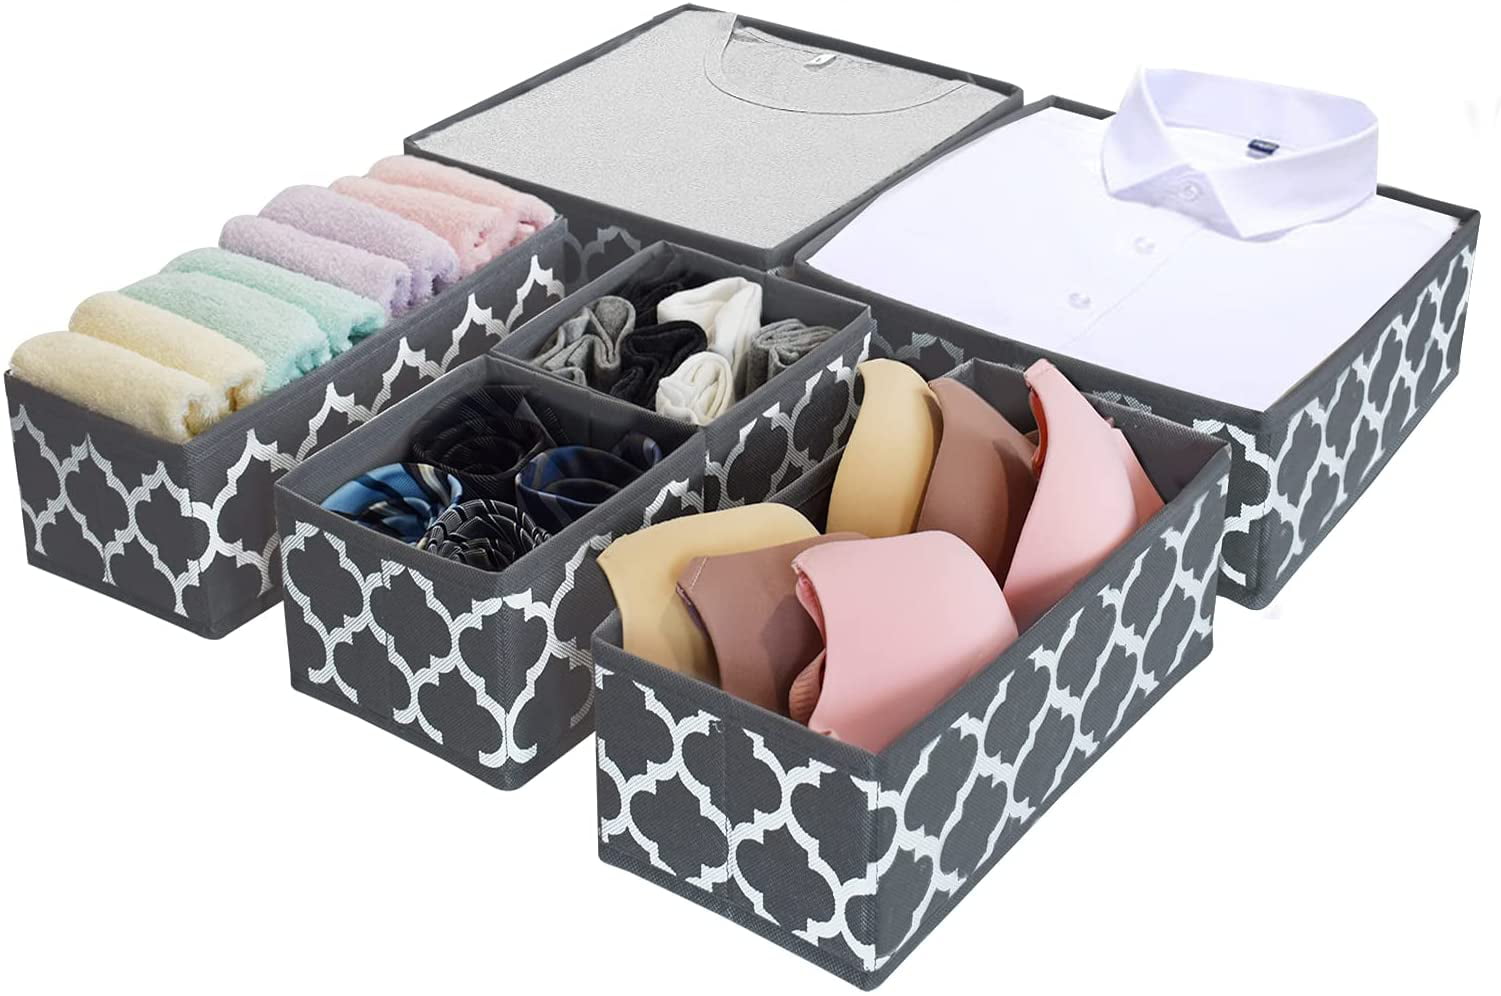 Foldable Closet Dresser Storage Box Baskets Bins Containers for Bras Socks Lingerie Baby Clothing Underwear Organizer Drawer Divider Grey Lantern Printing Set of 12